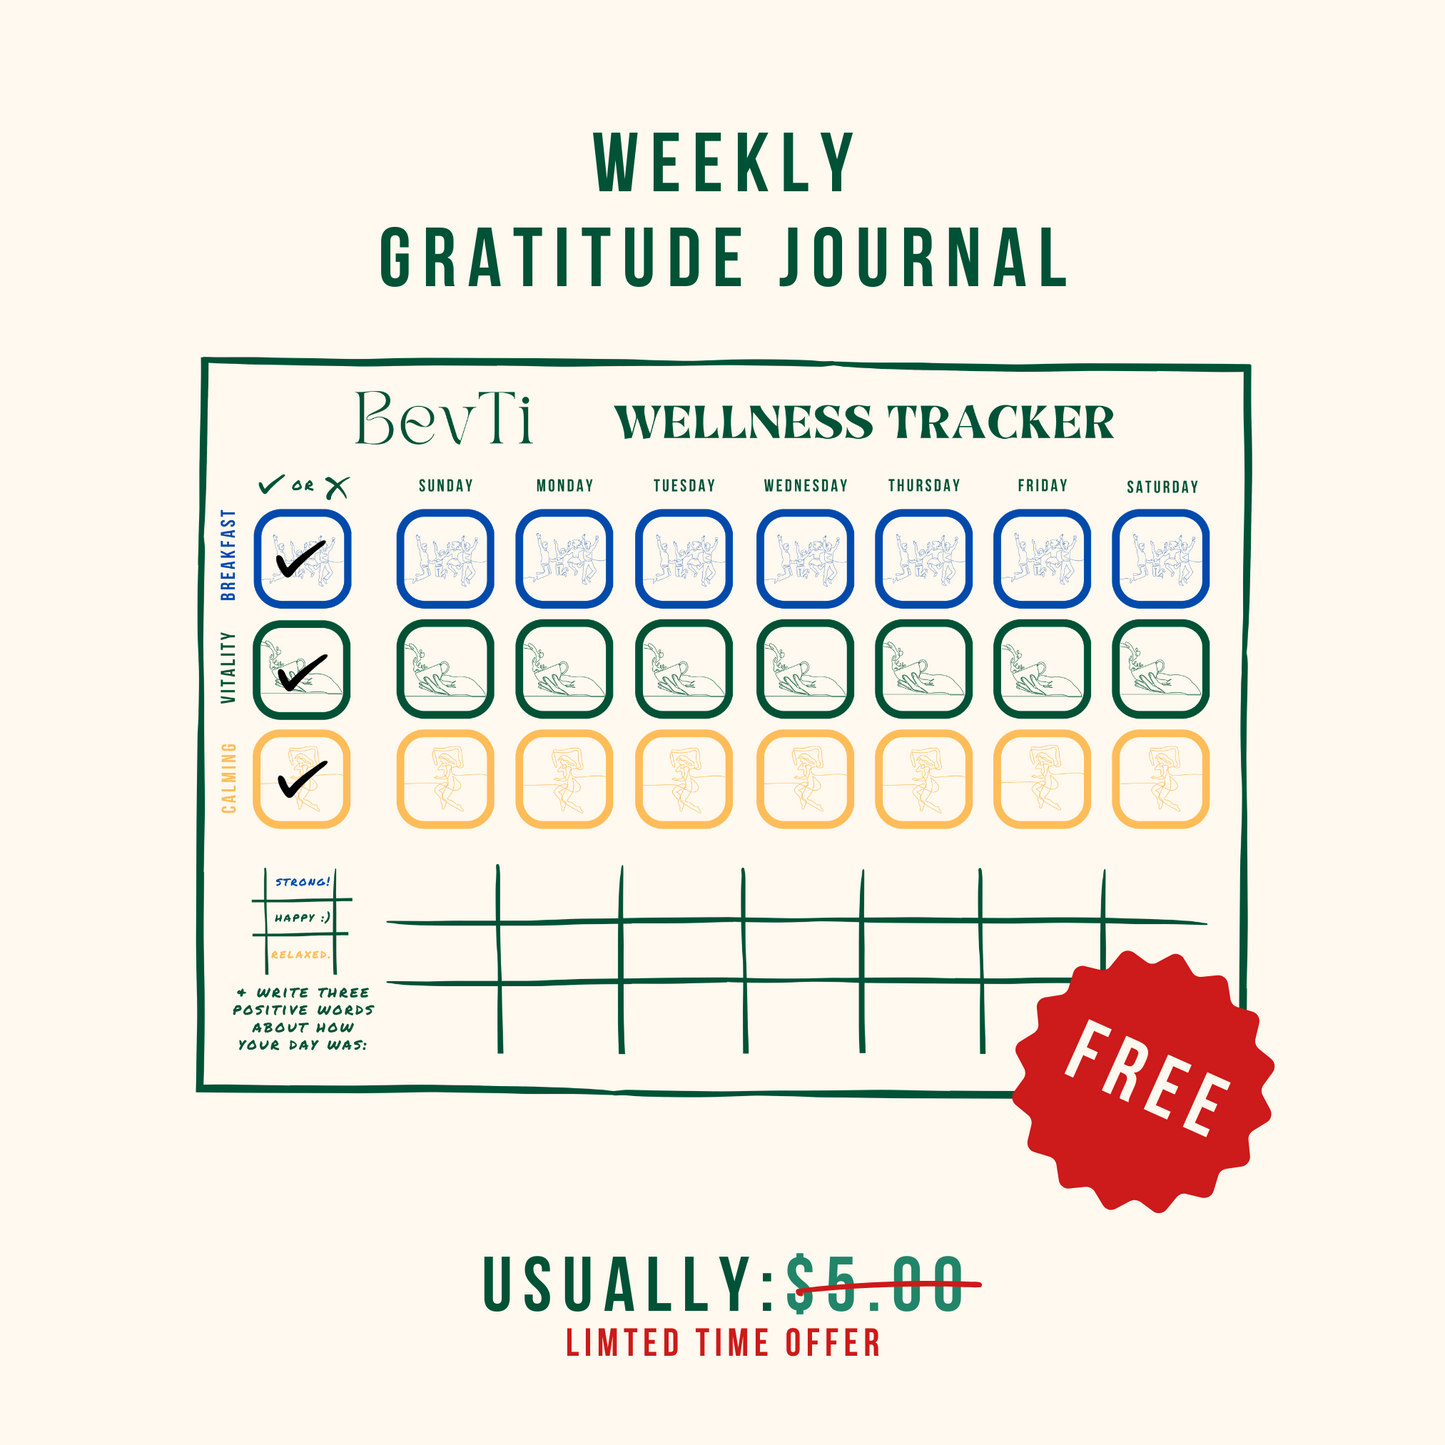 Weekly Gratitude Journal - FREE